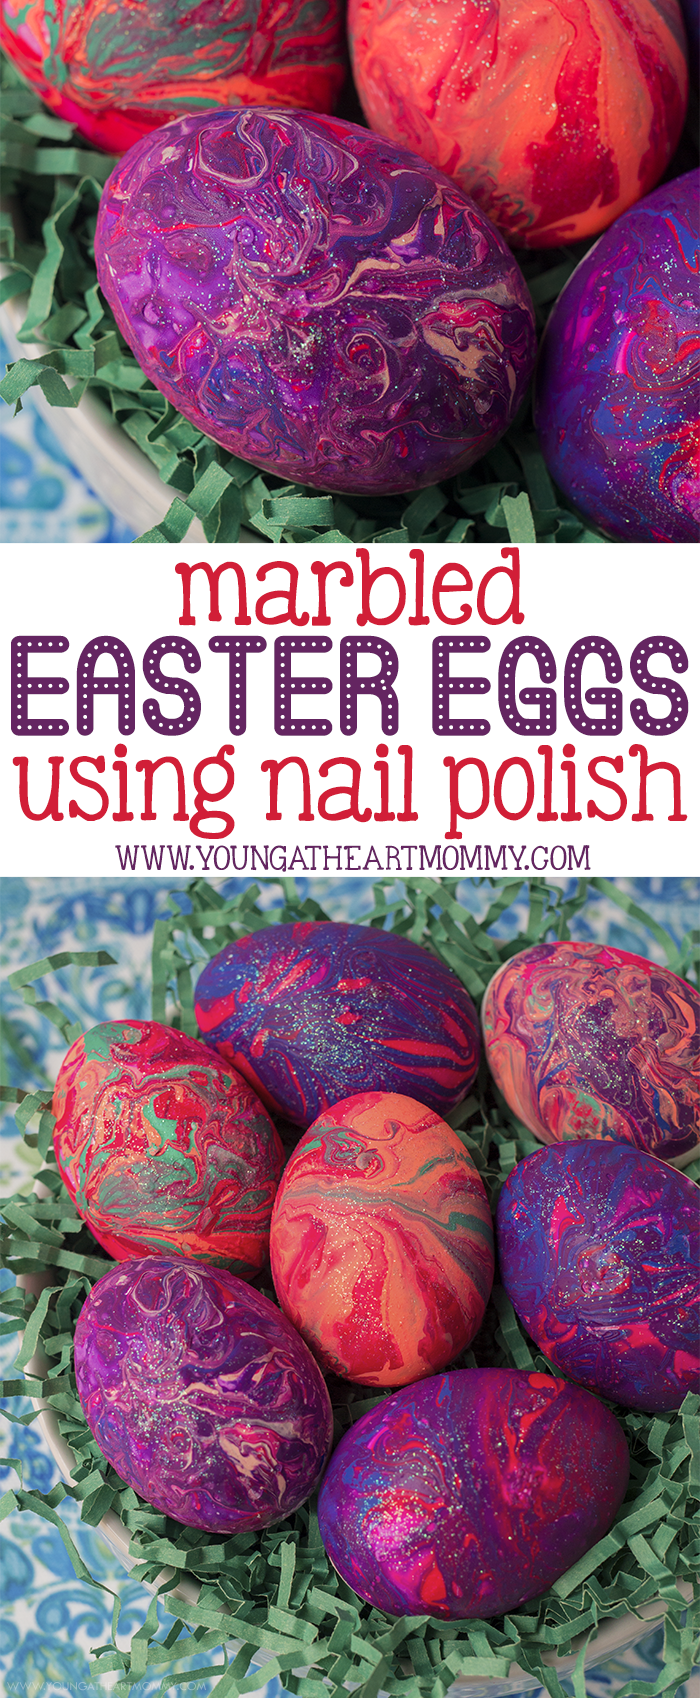 Marbled Easter Eggs Using Nail Polish